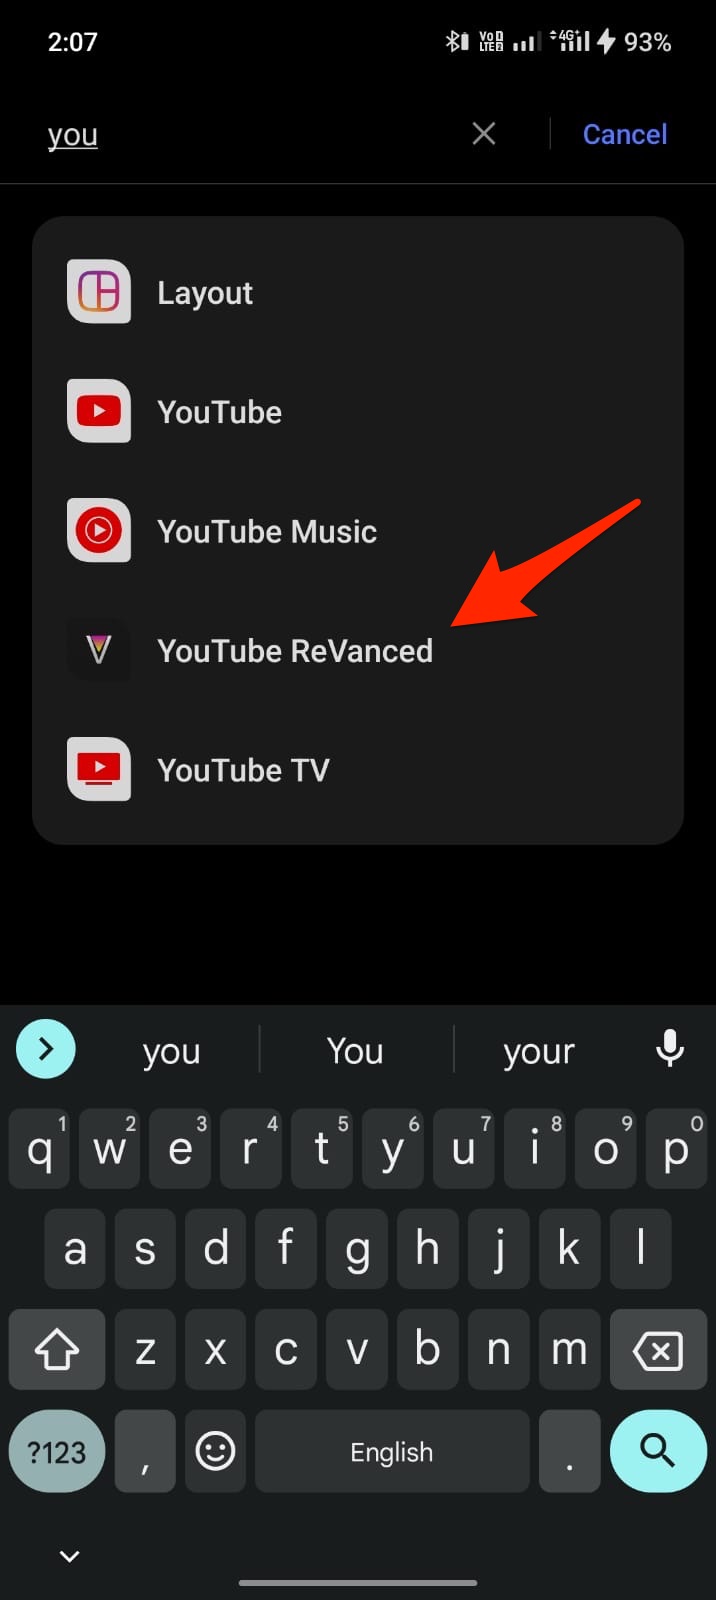 YouTube Revanced App Management